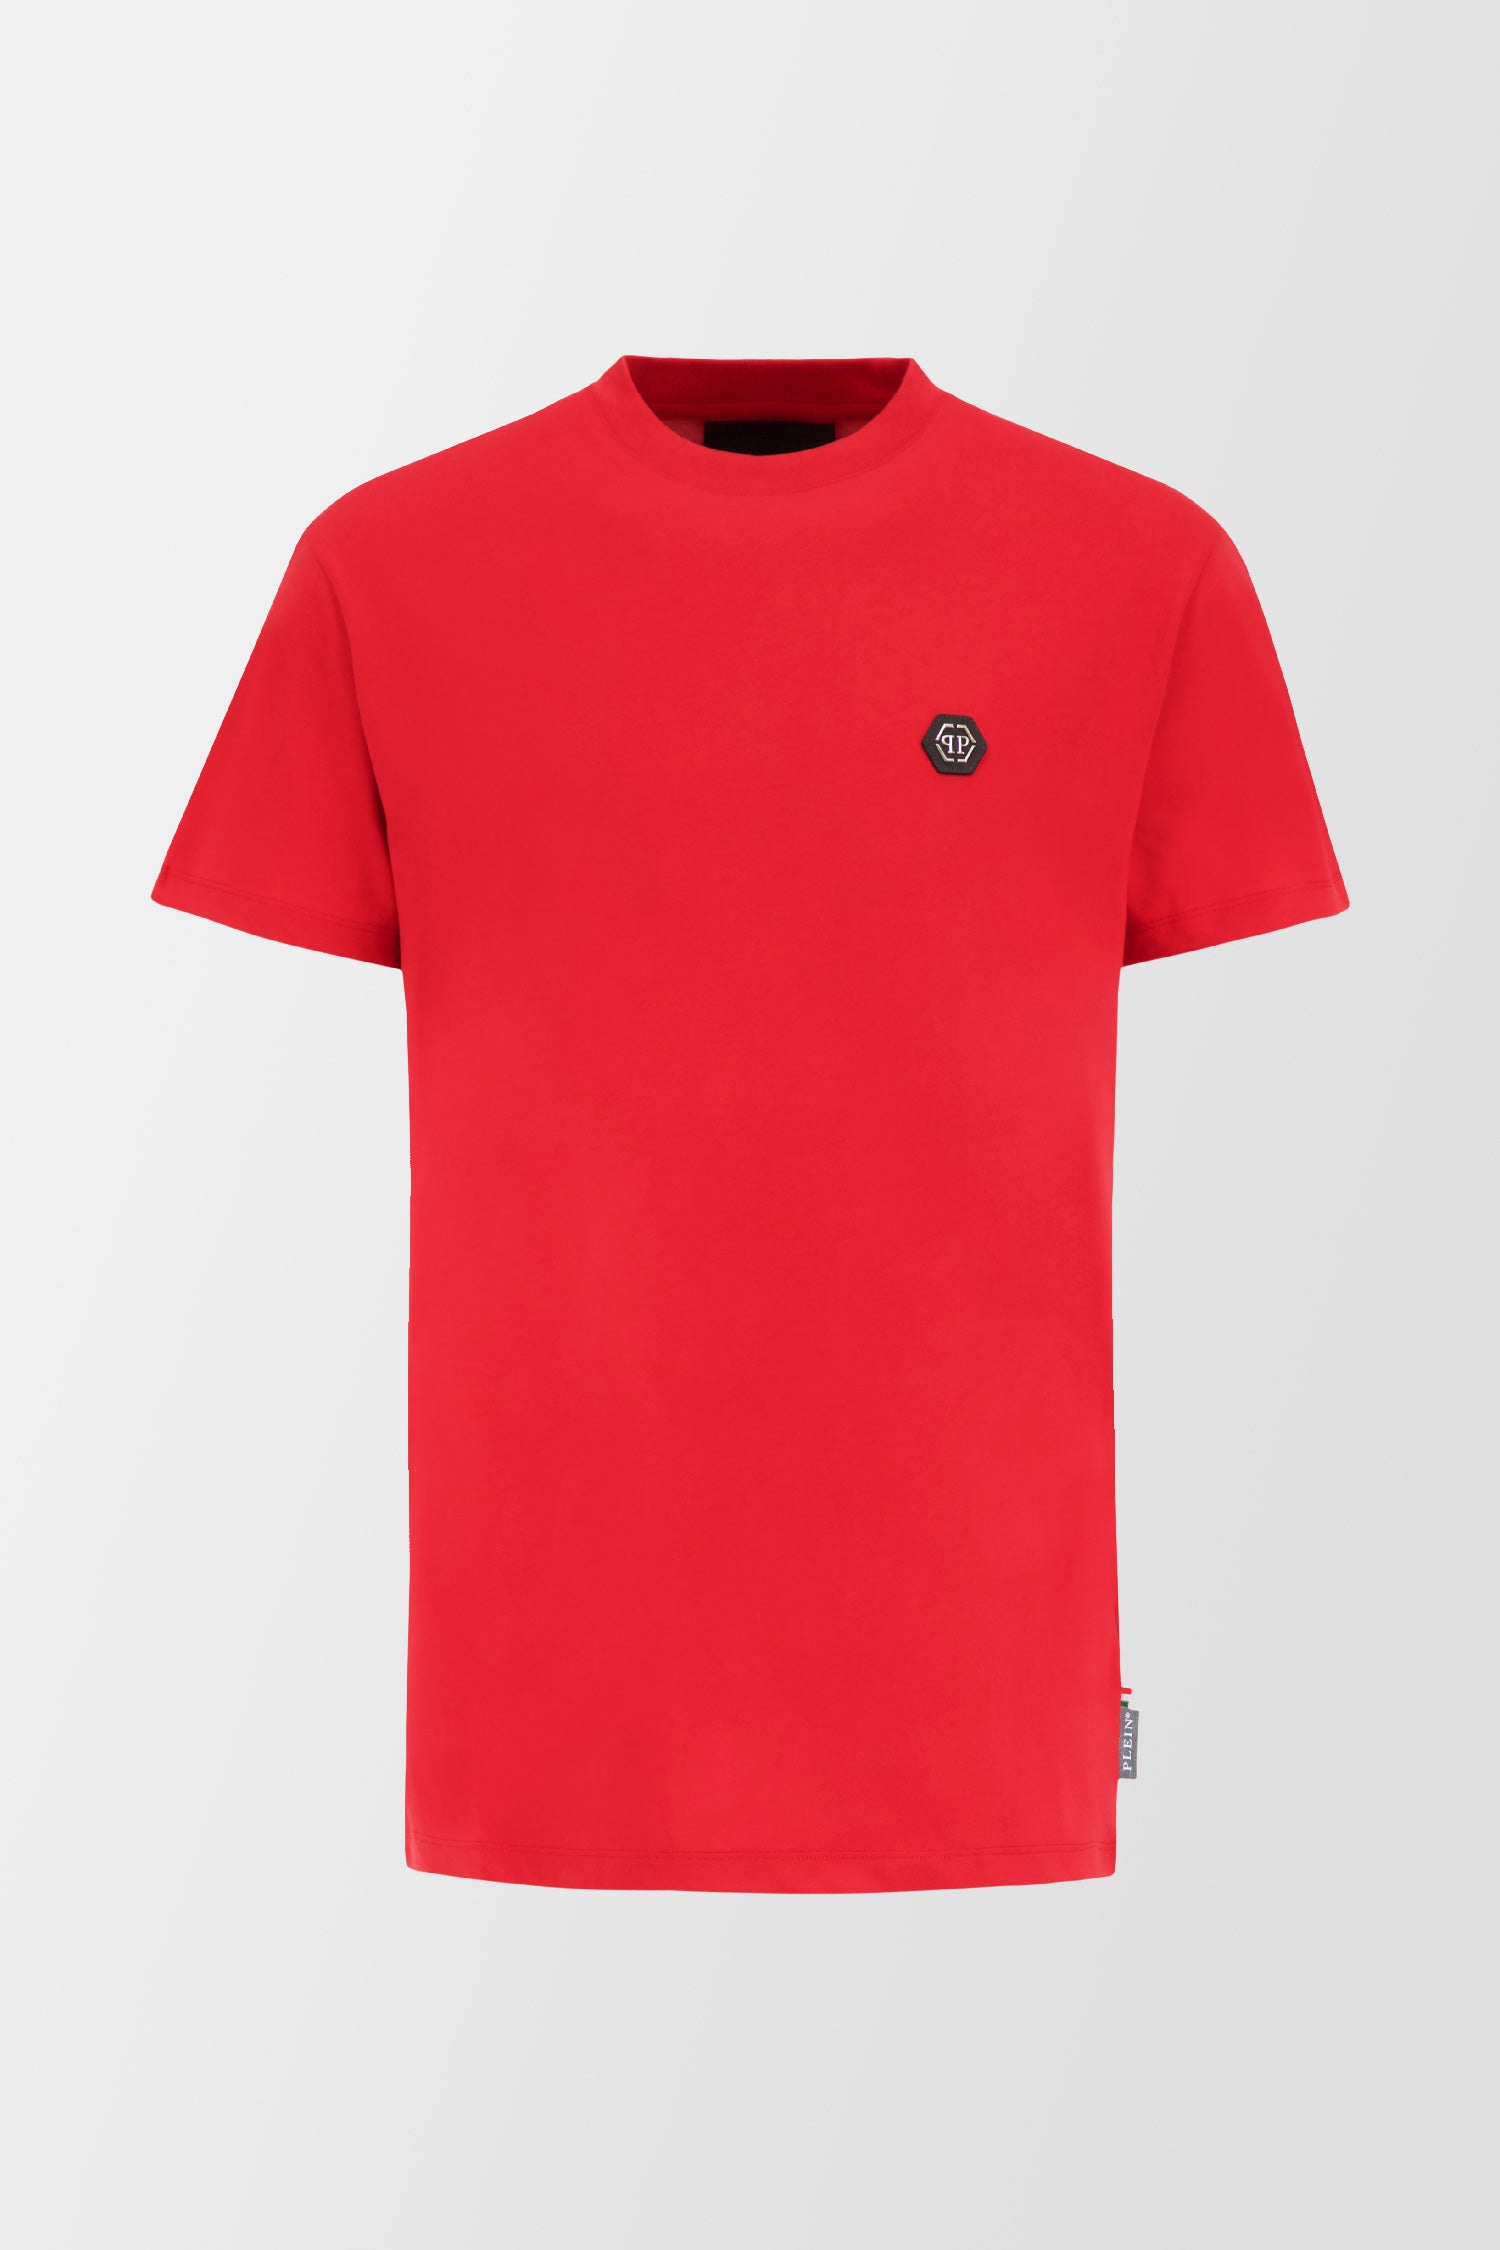 Philipp Plein Red T-Shirt